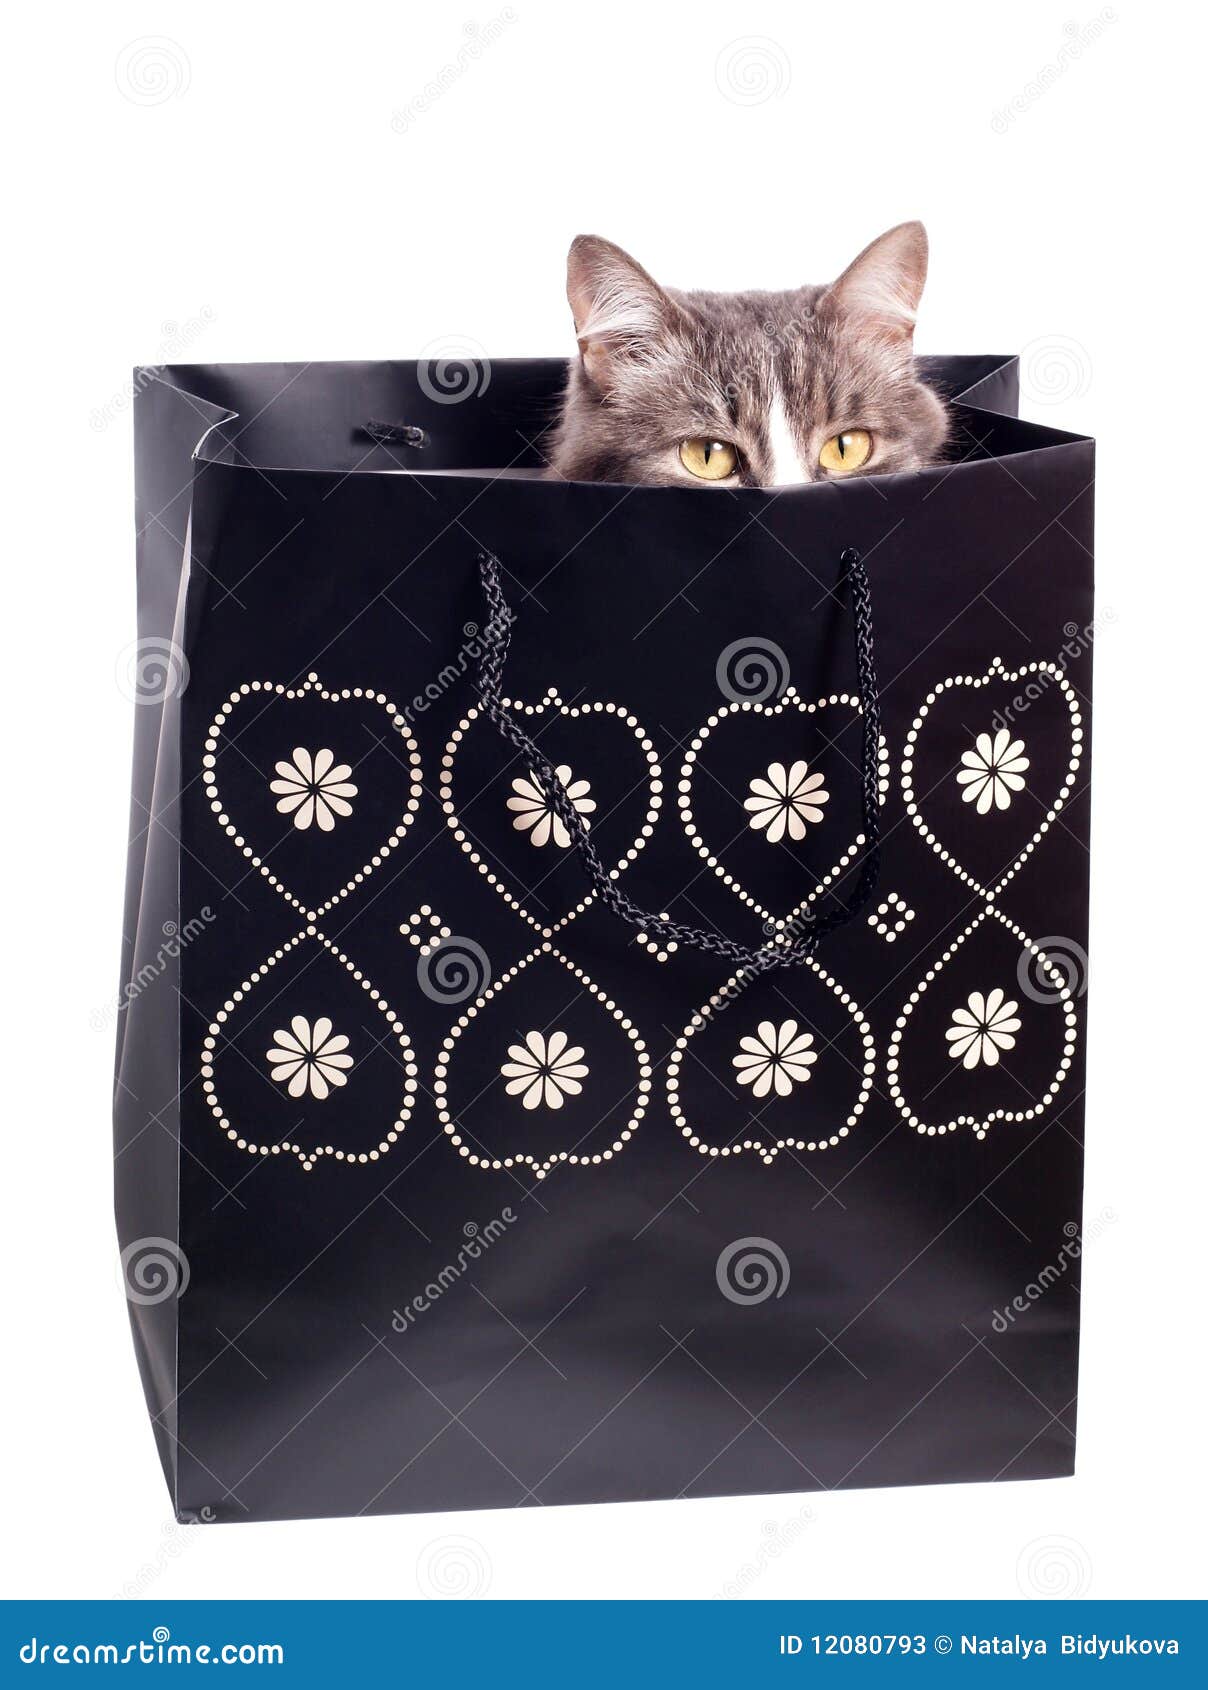 legislation pick up Nerve Cat in gift bag stock image. Image of gray, package, present - 12080793